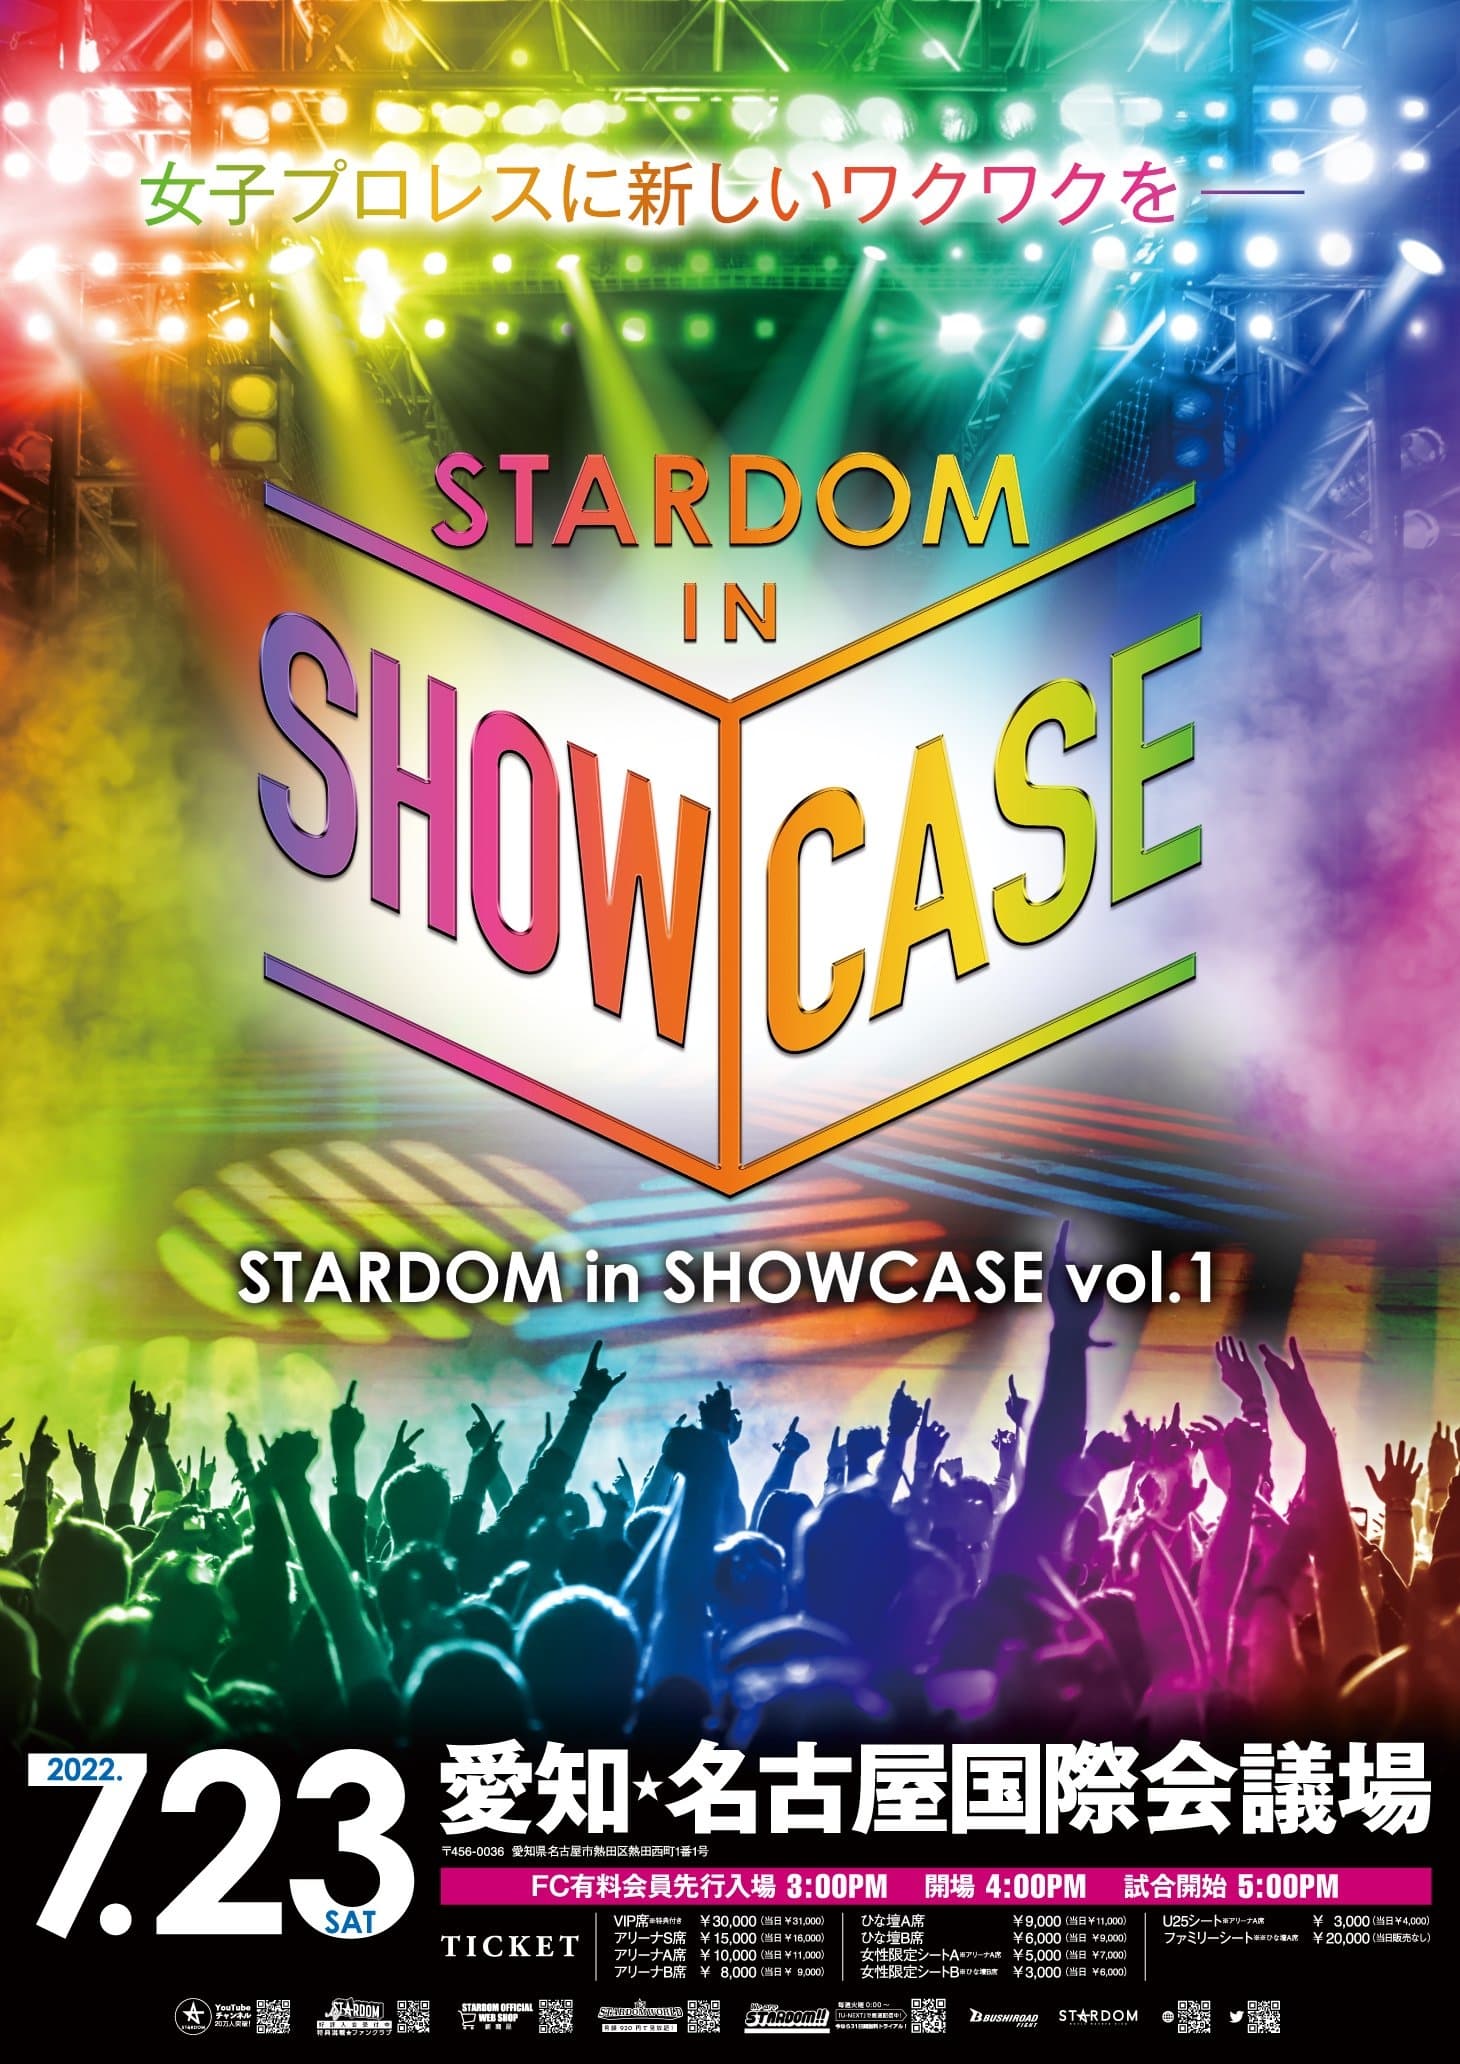 Stardom in Showcase vol.1